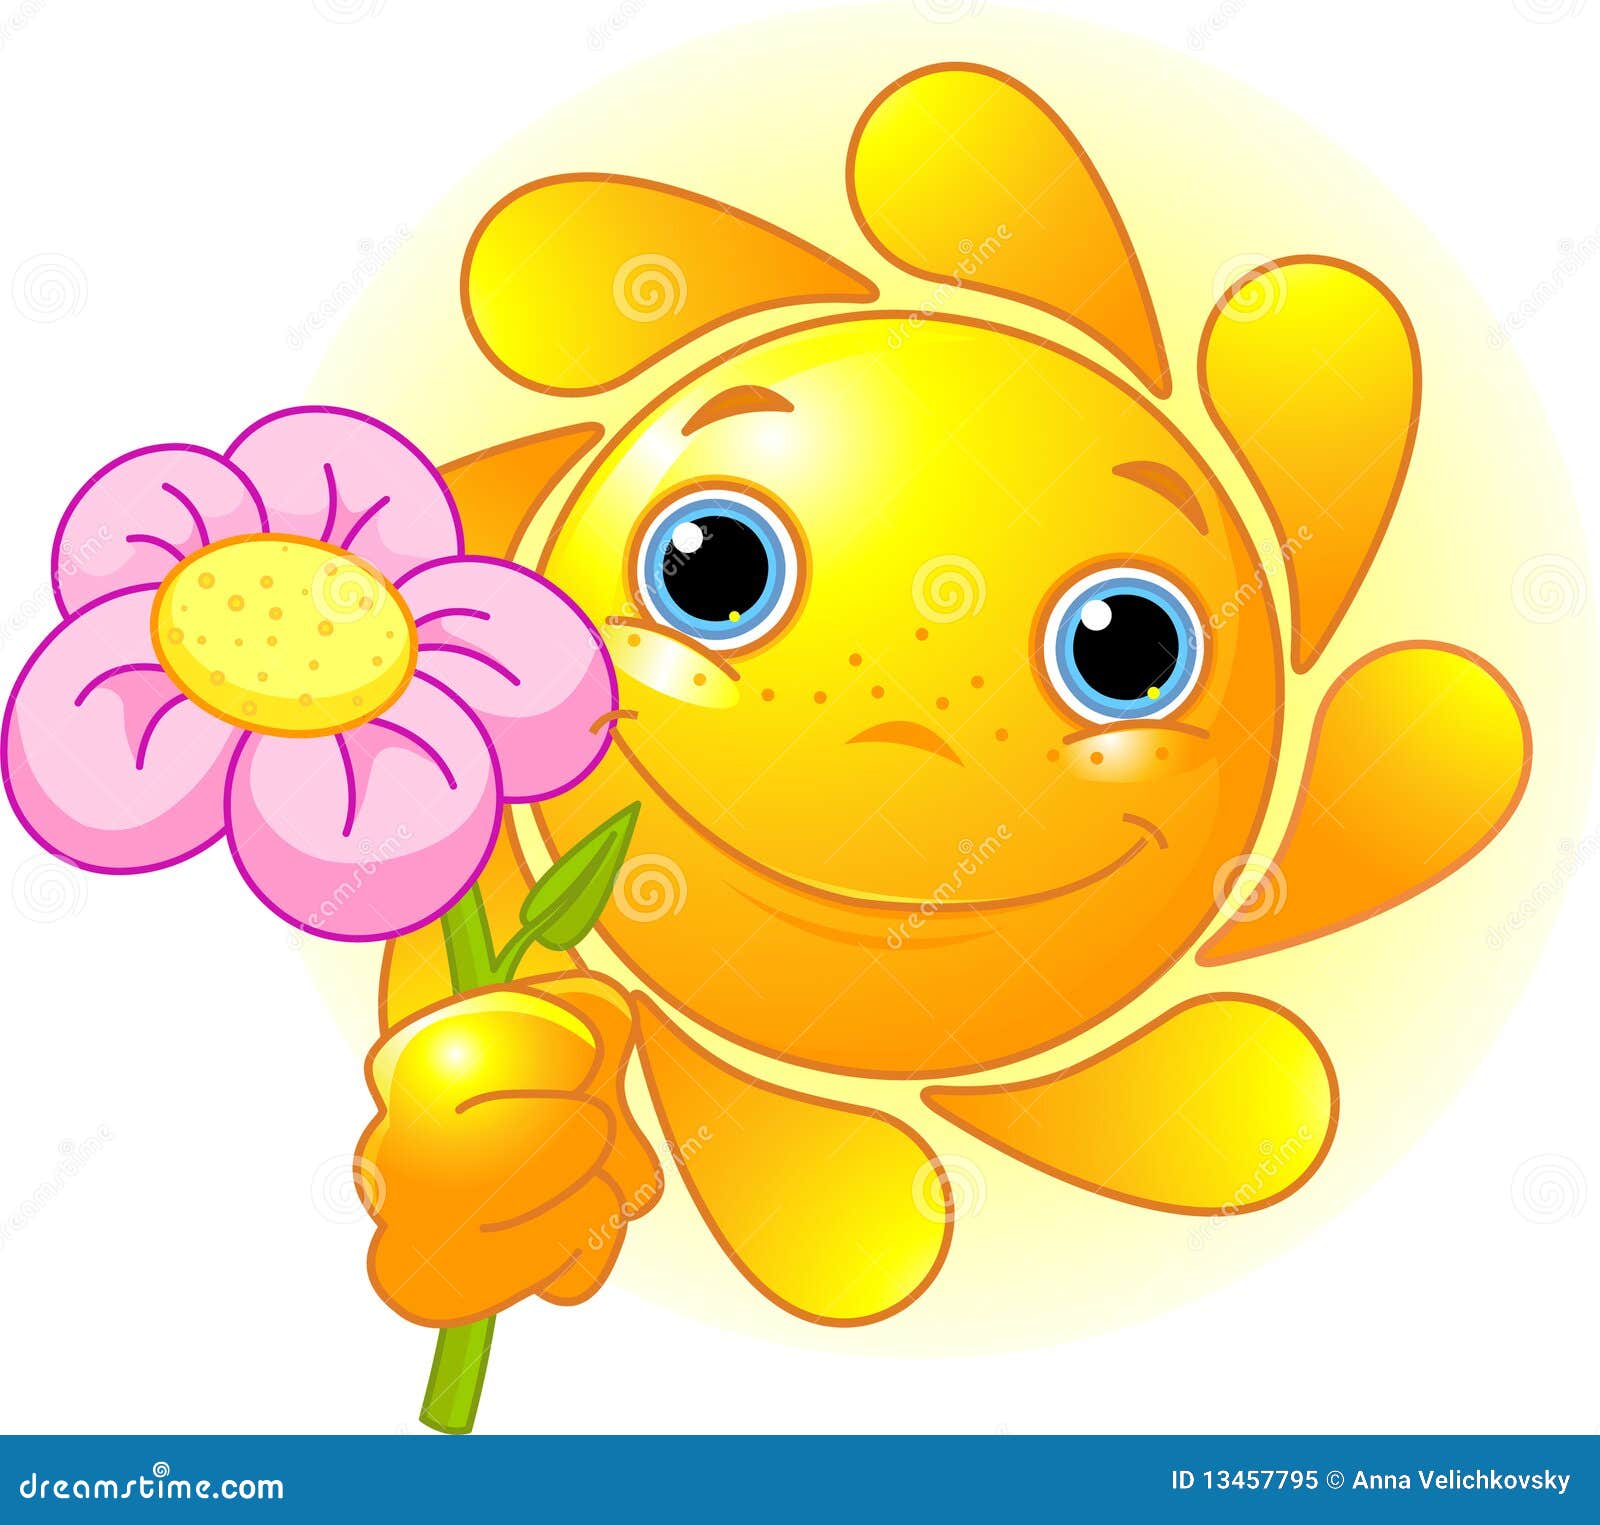 Sun giving a flower stock vector. Illustration of shiny